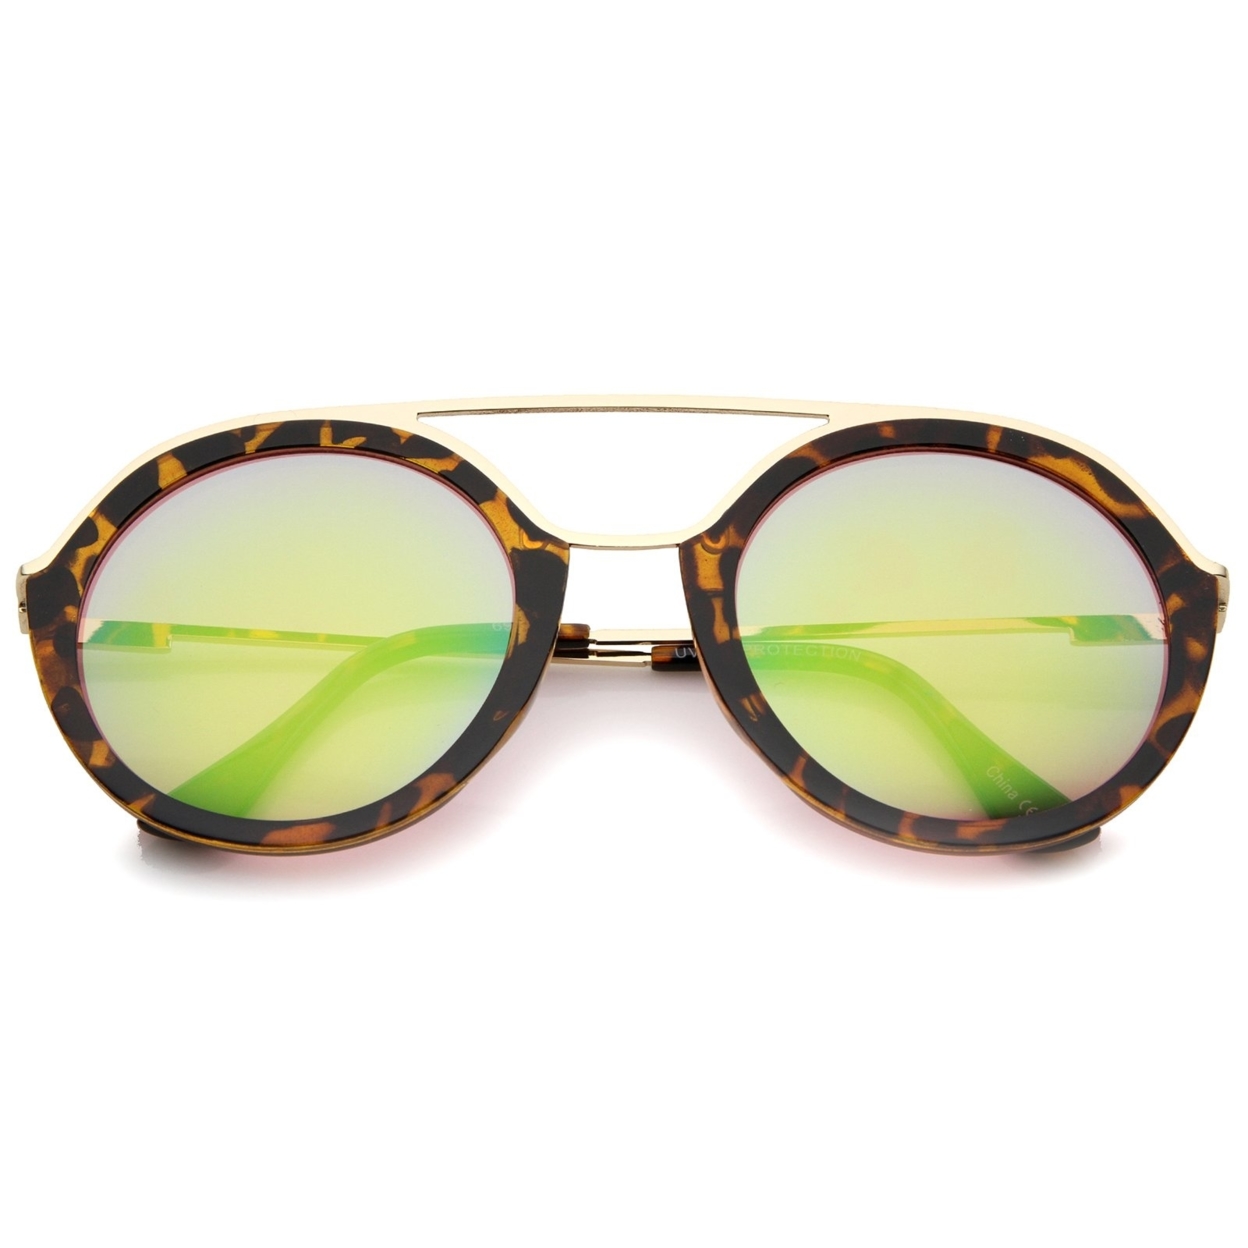 Modern Metal Double Nose Bridge Colored Mirror Lens Round Sunglasses 52mm - Creme-Gold / Smoke Mirror